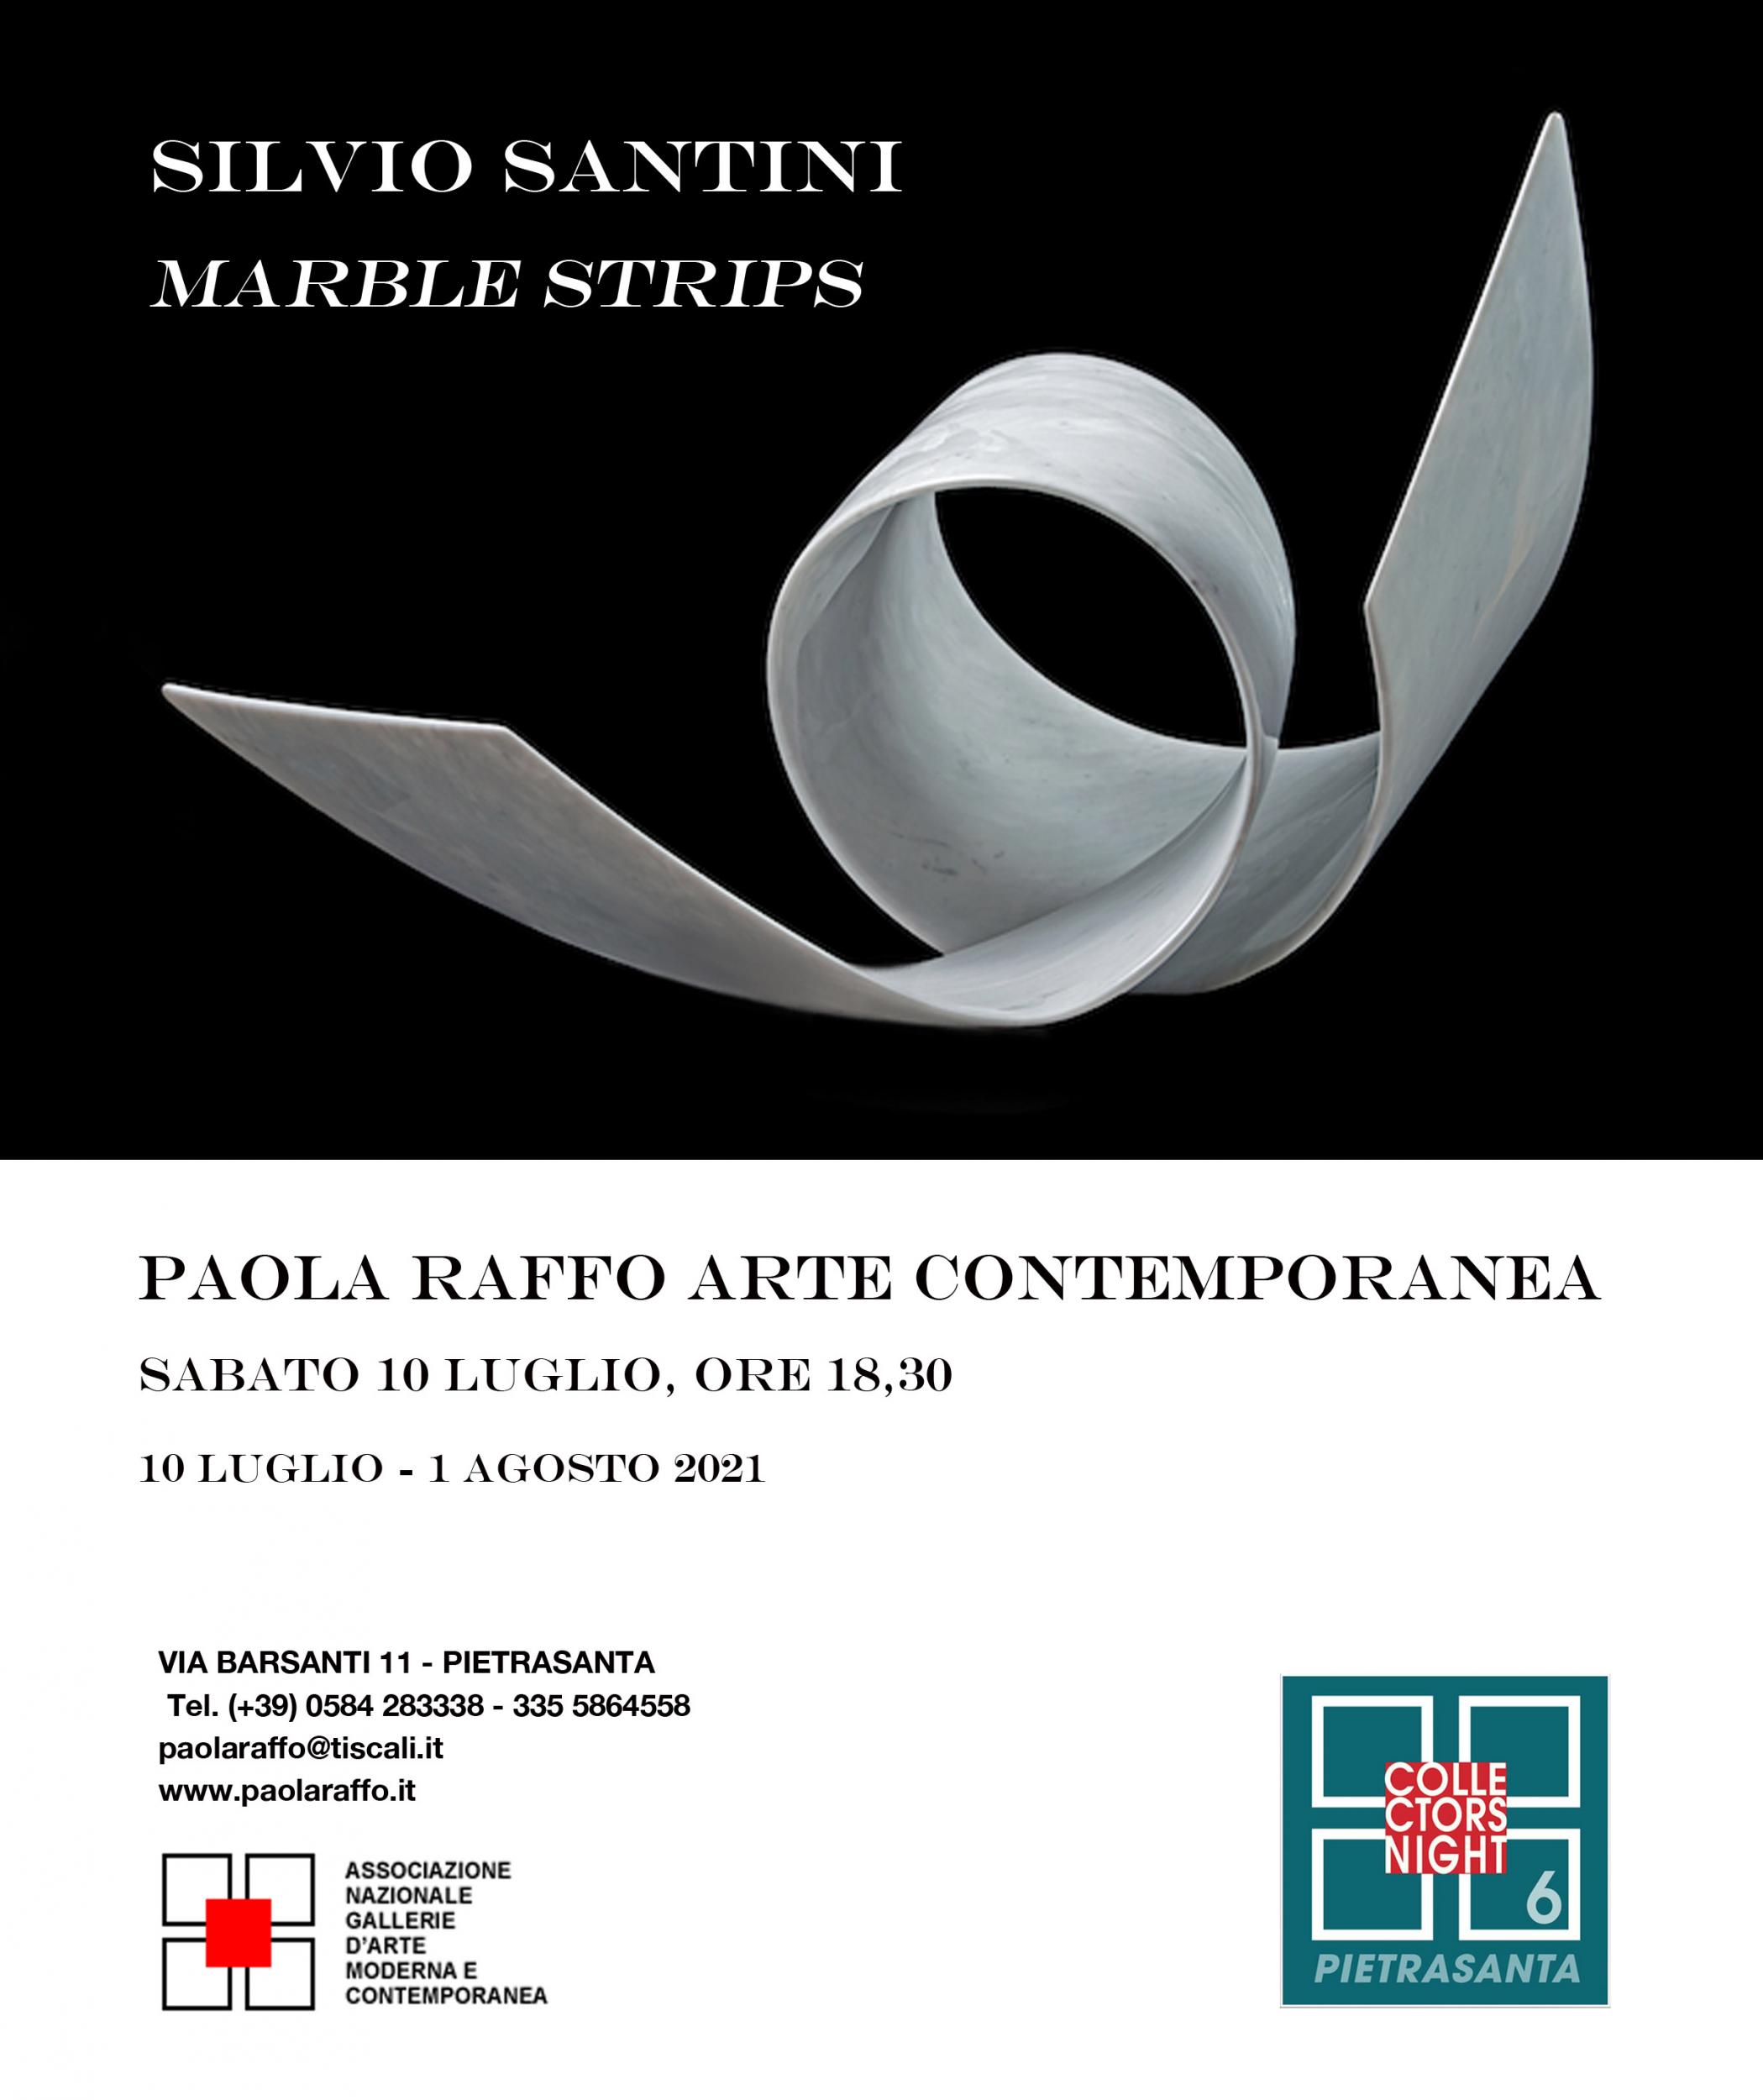 Silvio Santini "Marble Strips"